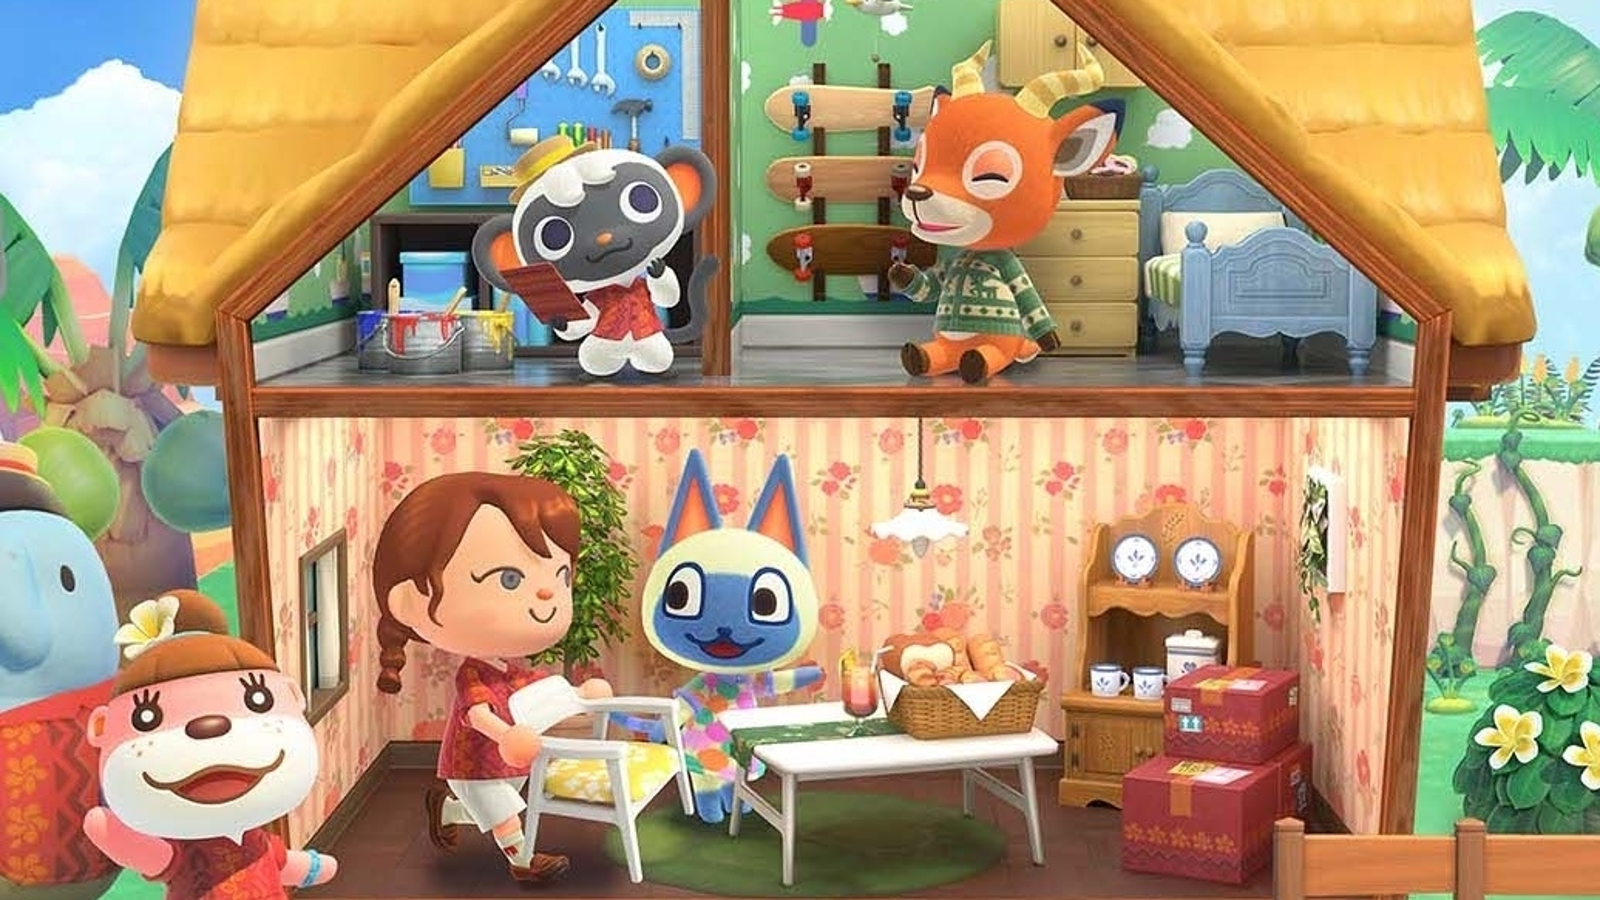 5 Formas de Jogar Animal Crossing New Horizons Online Gratuitamente